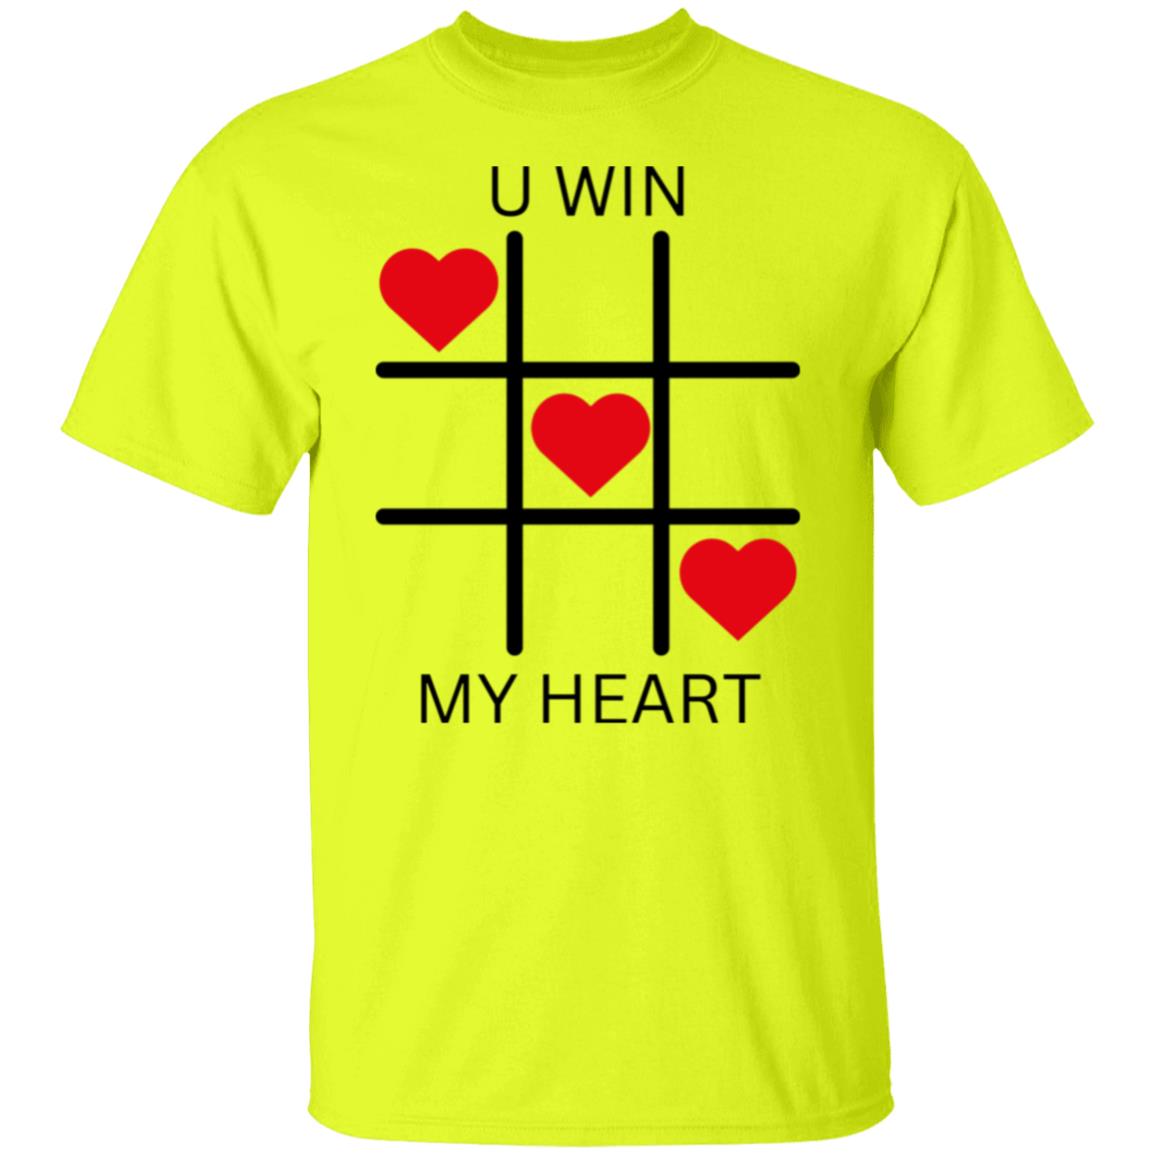 U WIN MY HEART T-Shirt